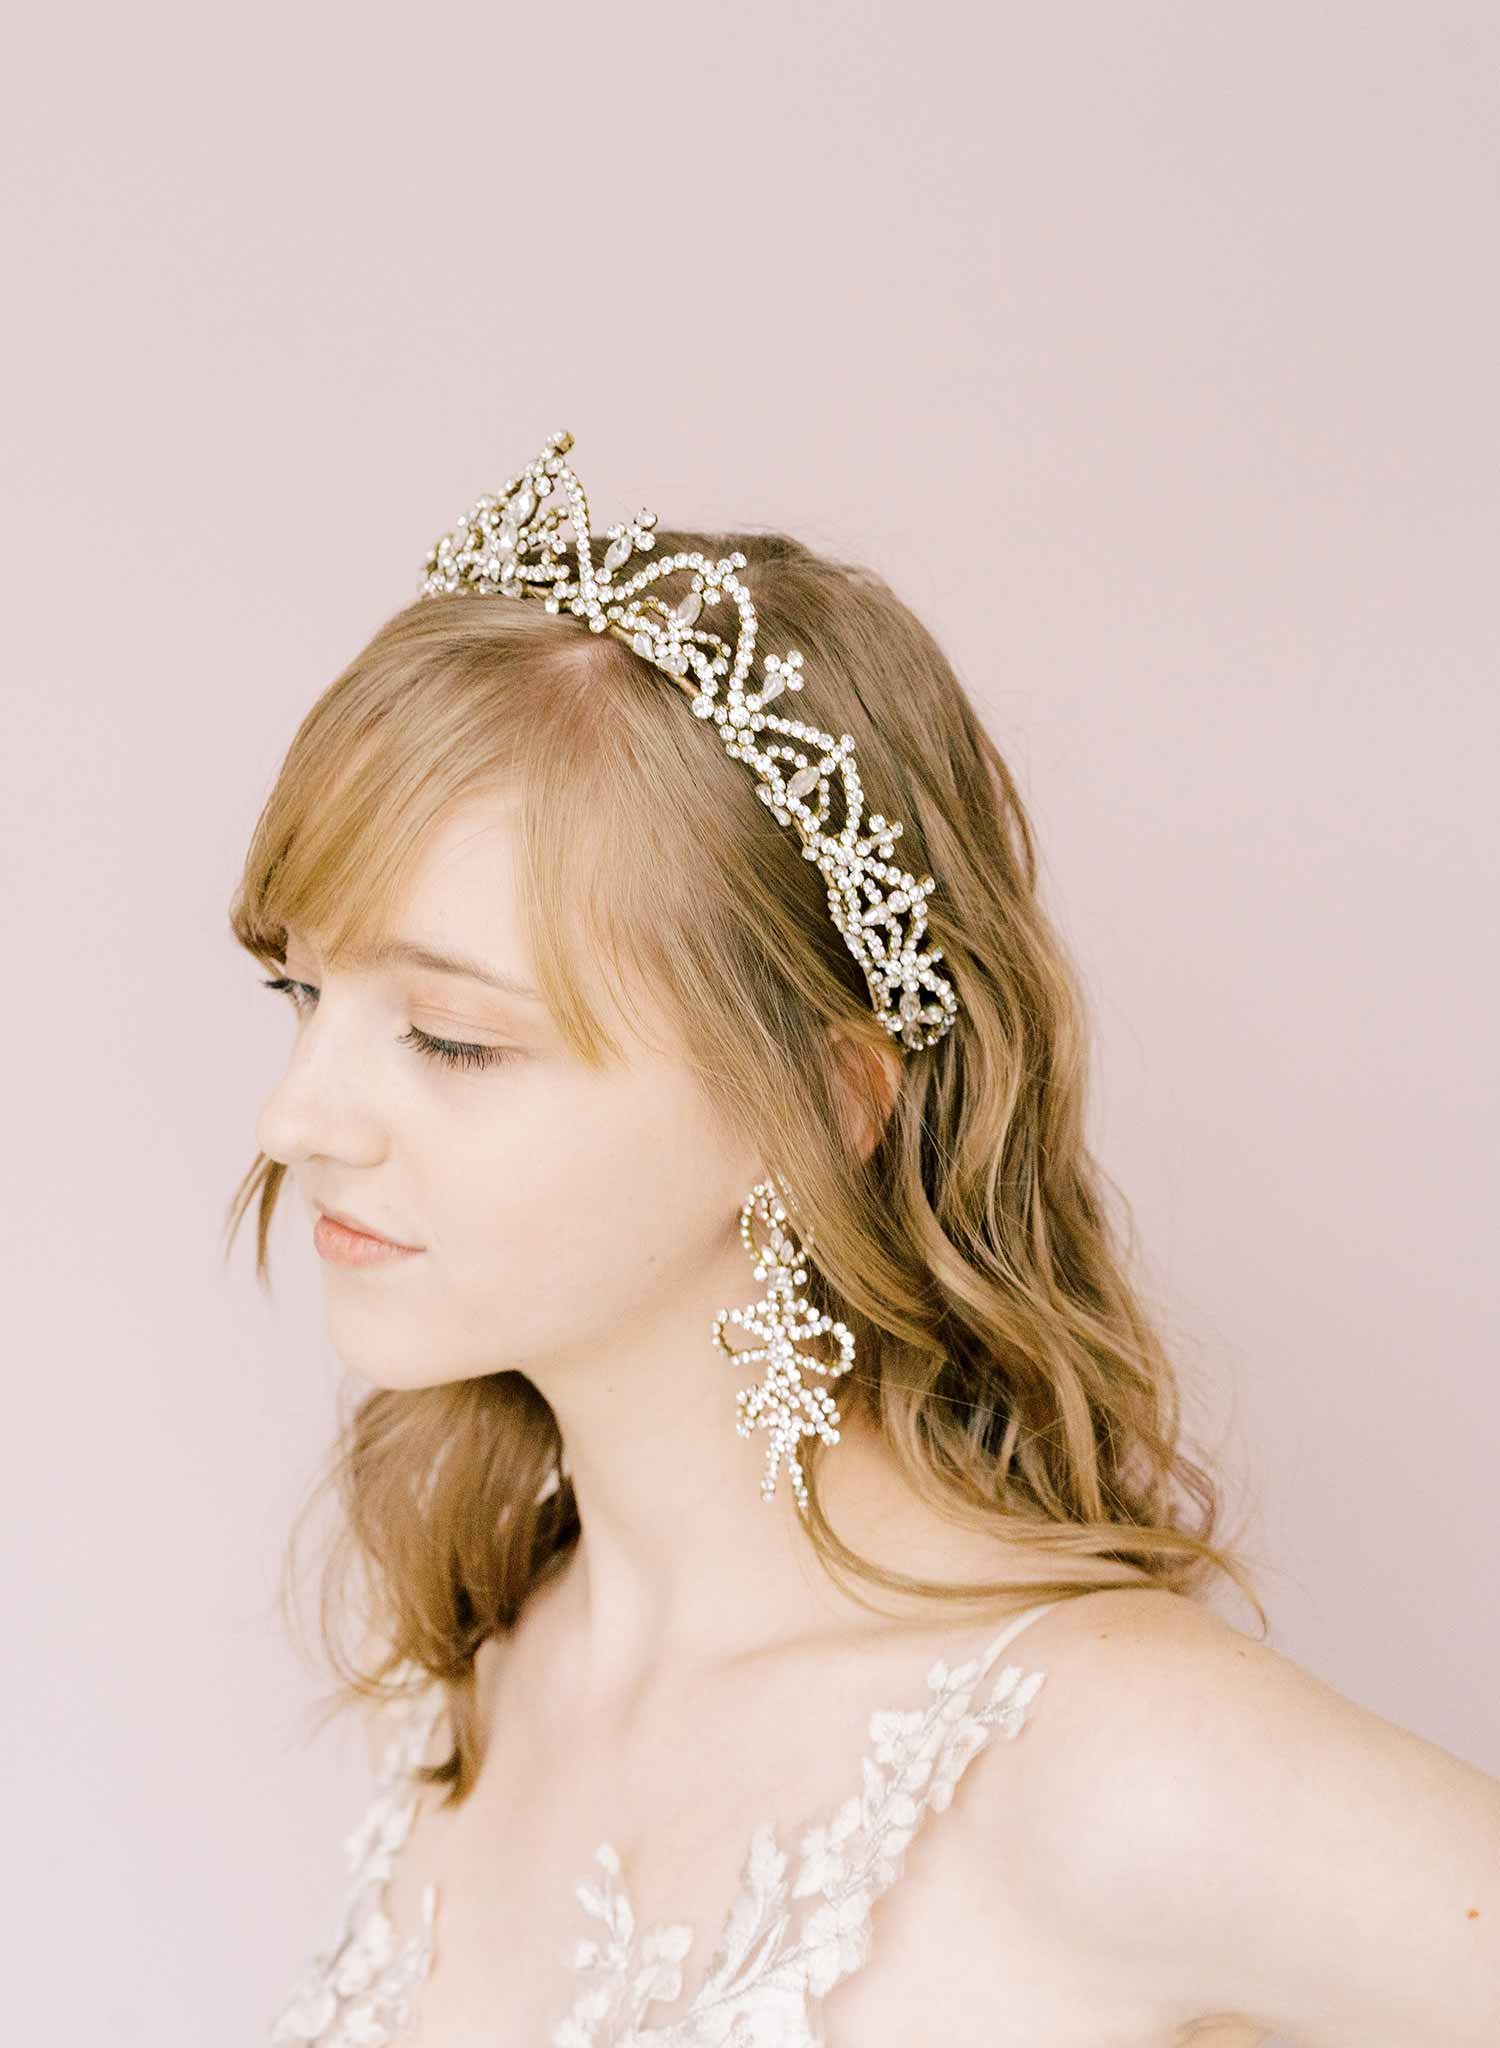 Crystal bridal bow earrings - Dramatic crystal double bow earrings - Style  #2121